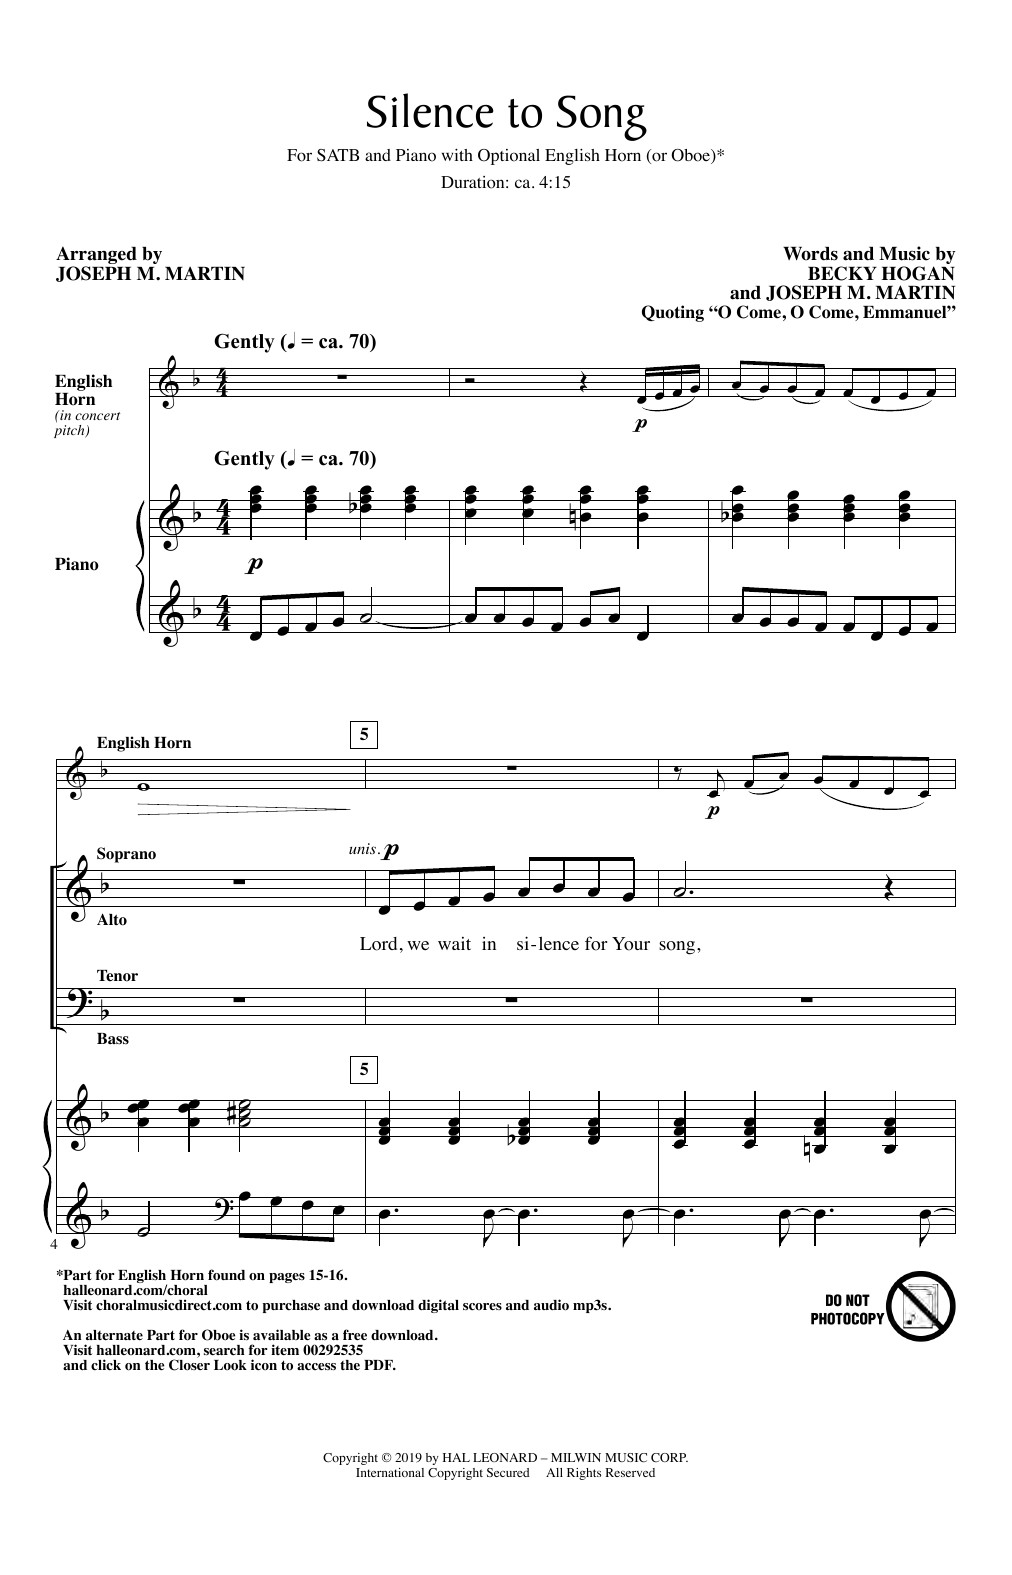 Becky Hogan & Joseph Martin Silence To Song Sheet Music Notes & Chords for Choir - Download or Print PDF